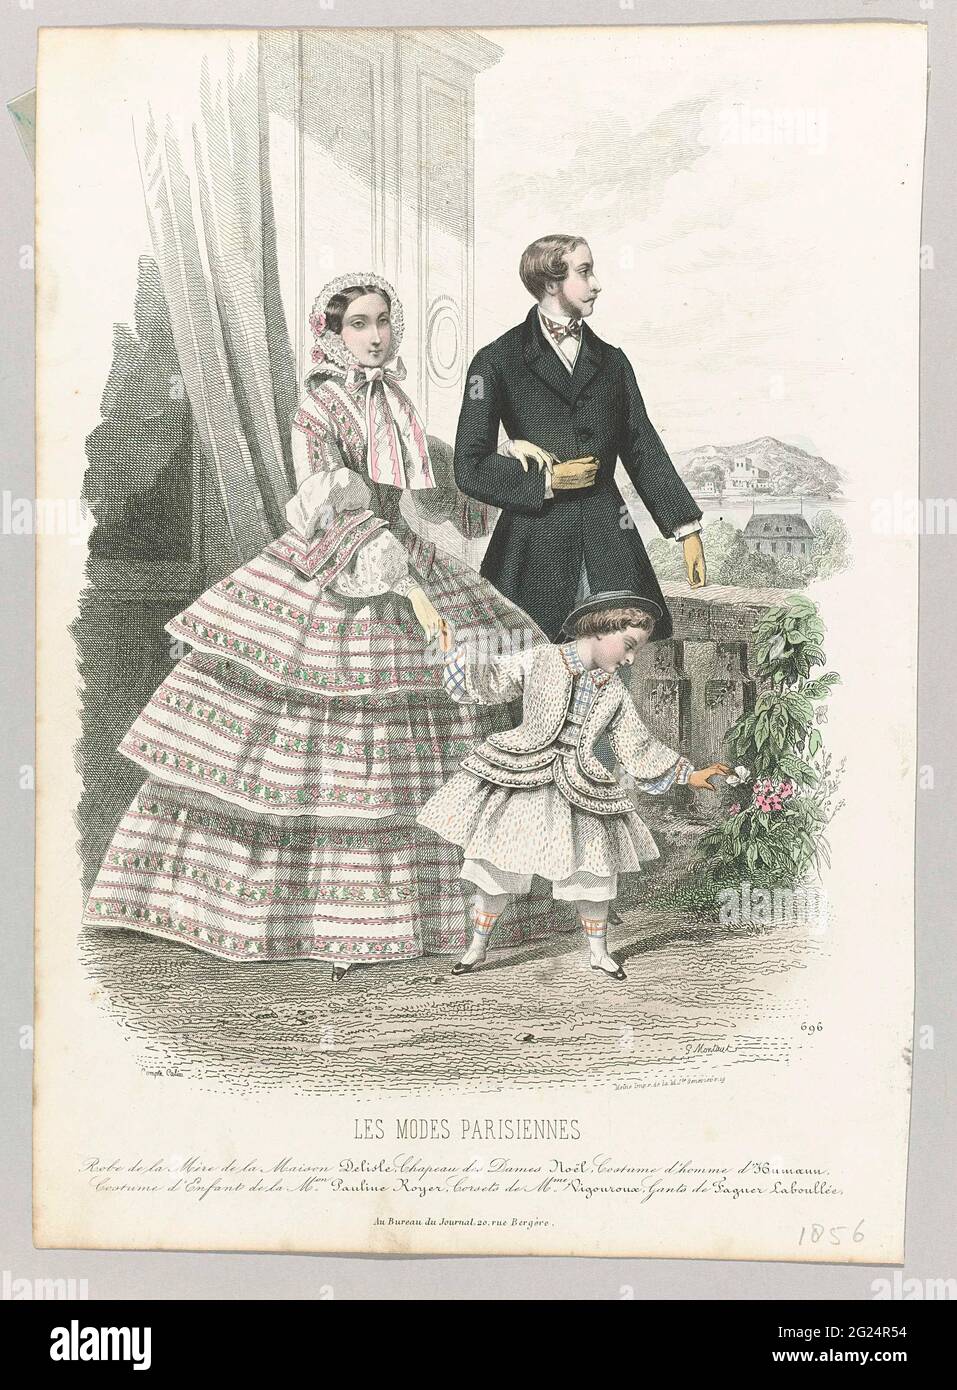 Les Modes Parisiennes, 1856, No. 696: Robe de la Mèr (...). A armed couple  on a balcony; The woman has a child going on. According to the caption: Jap  of Maison Delisle.